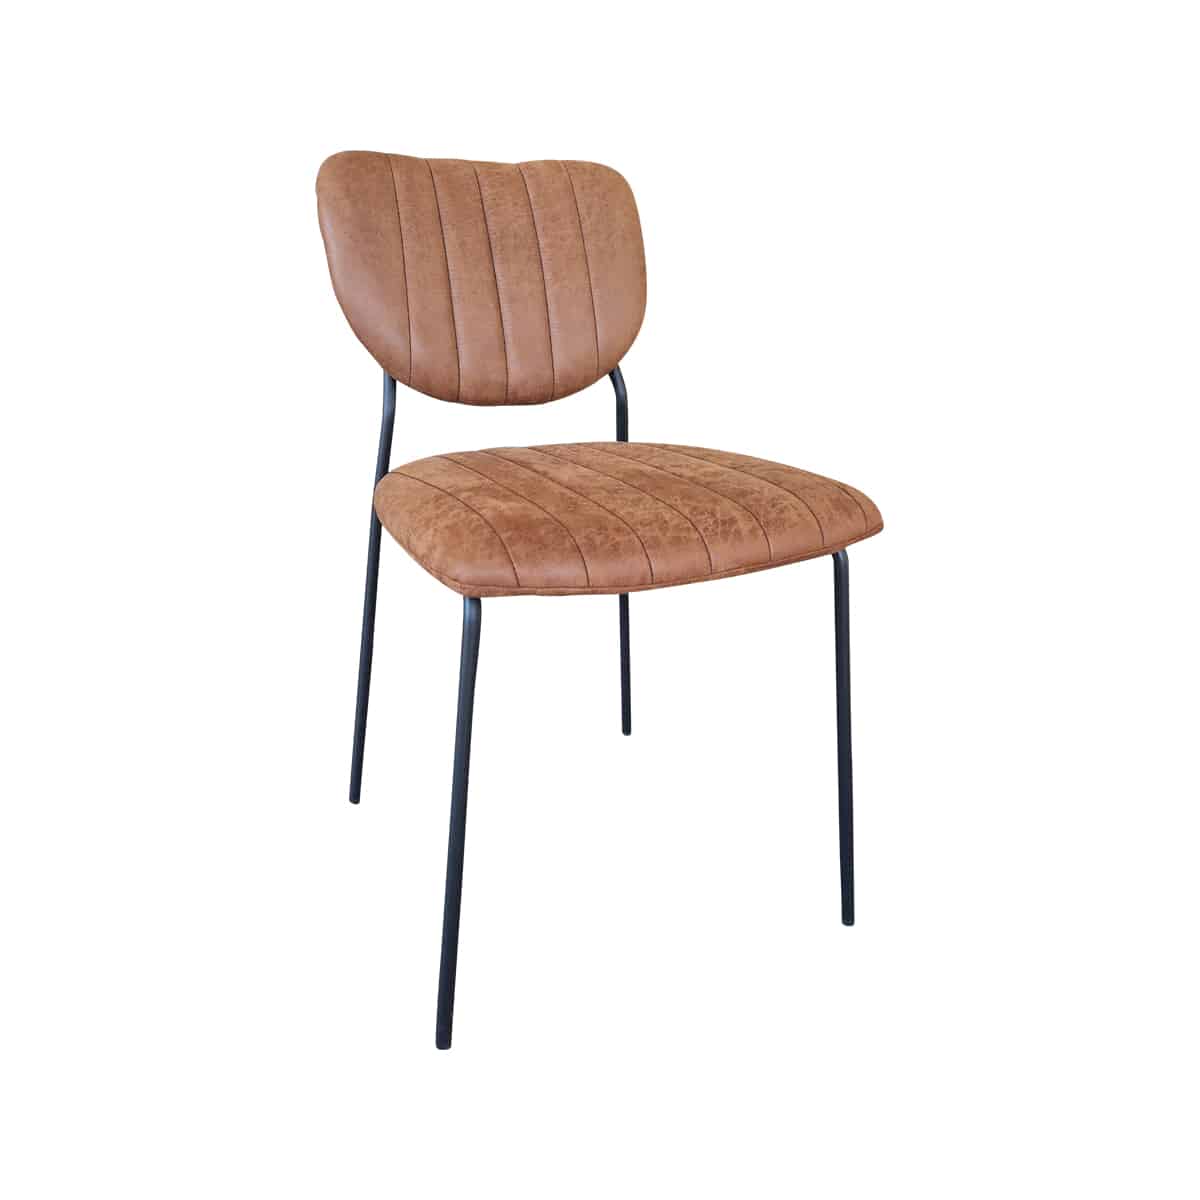 Jazz retro horeca stapelstoelen bruin stitching - Super Seat